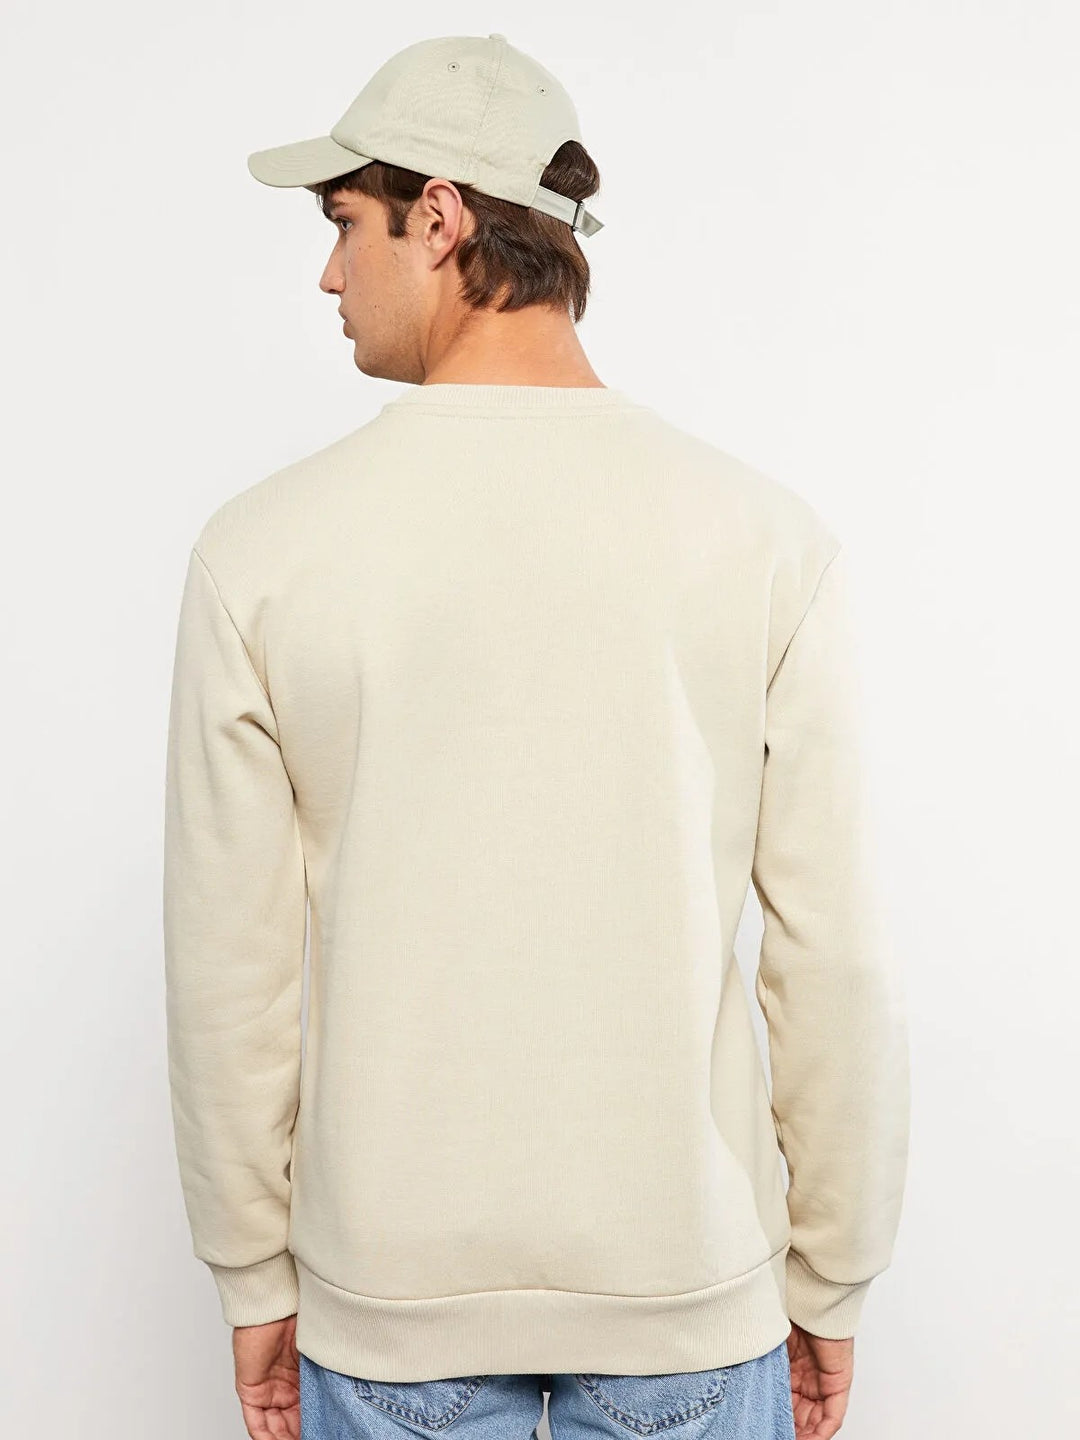 Crew Neck Long Sleeve Printed Men Sweatshirt